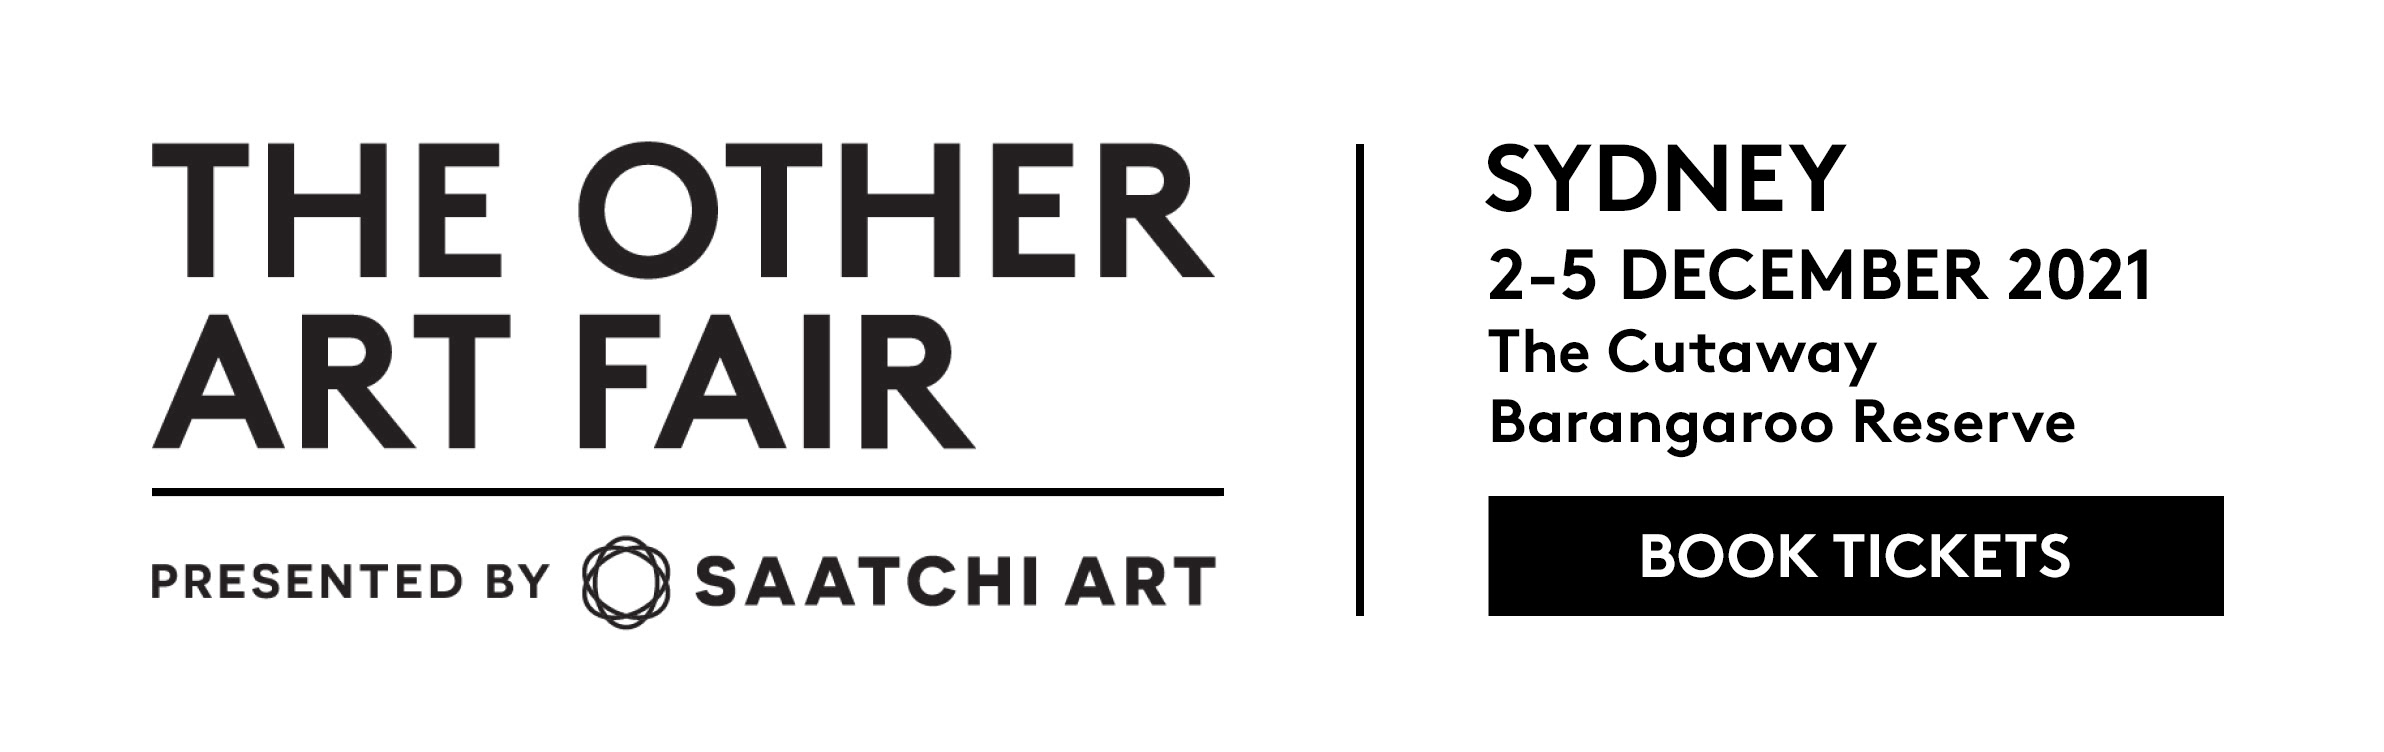 The Other Art Fair presented by Saatchi Art Sydney 2-5 December, 2021 Barangaroo Reserve BOOK TICKETS